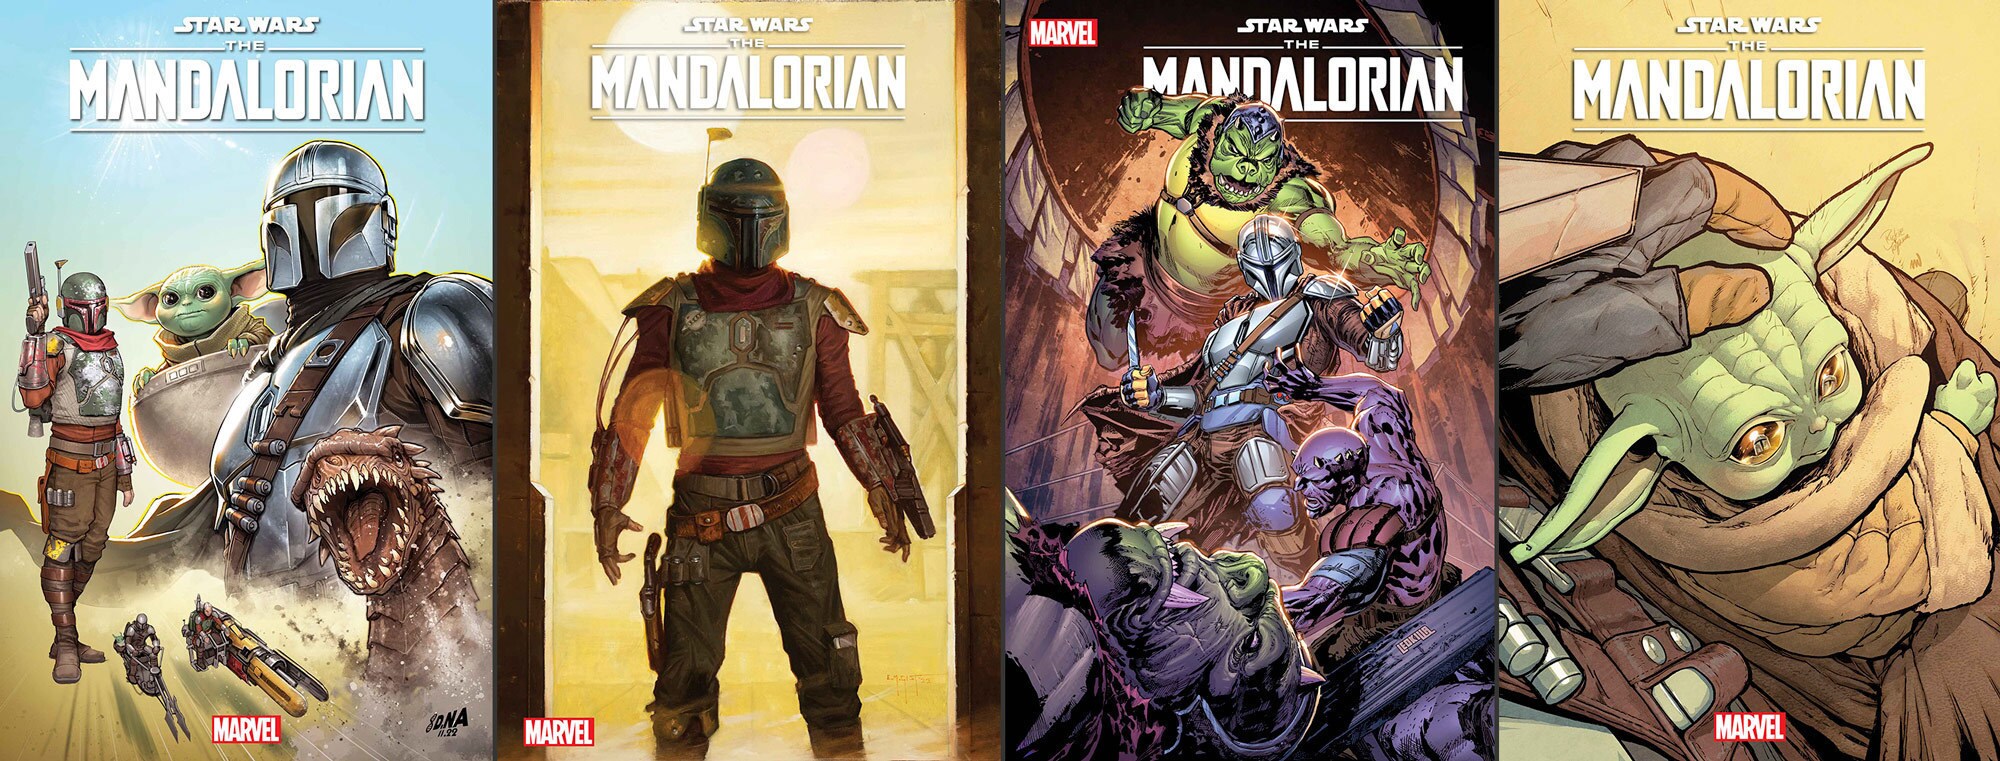 Star Wars: The Mandalorian Season 2 #1 covers